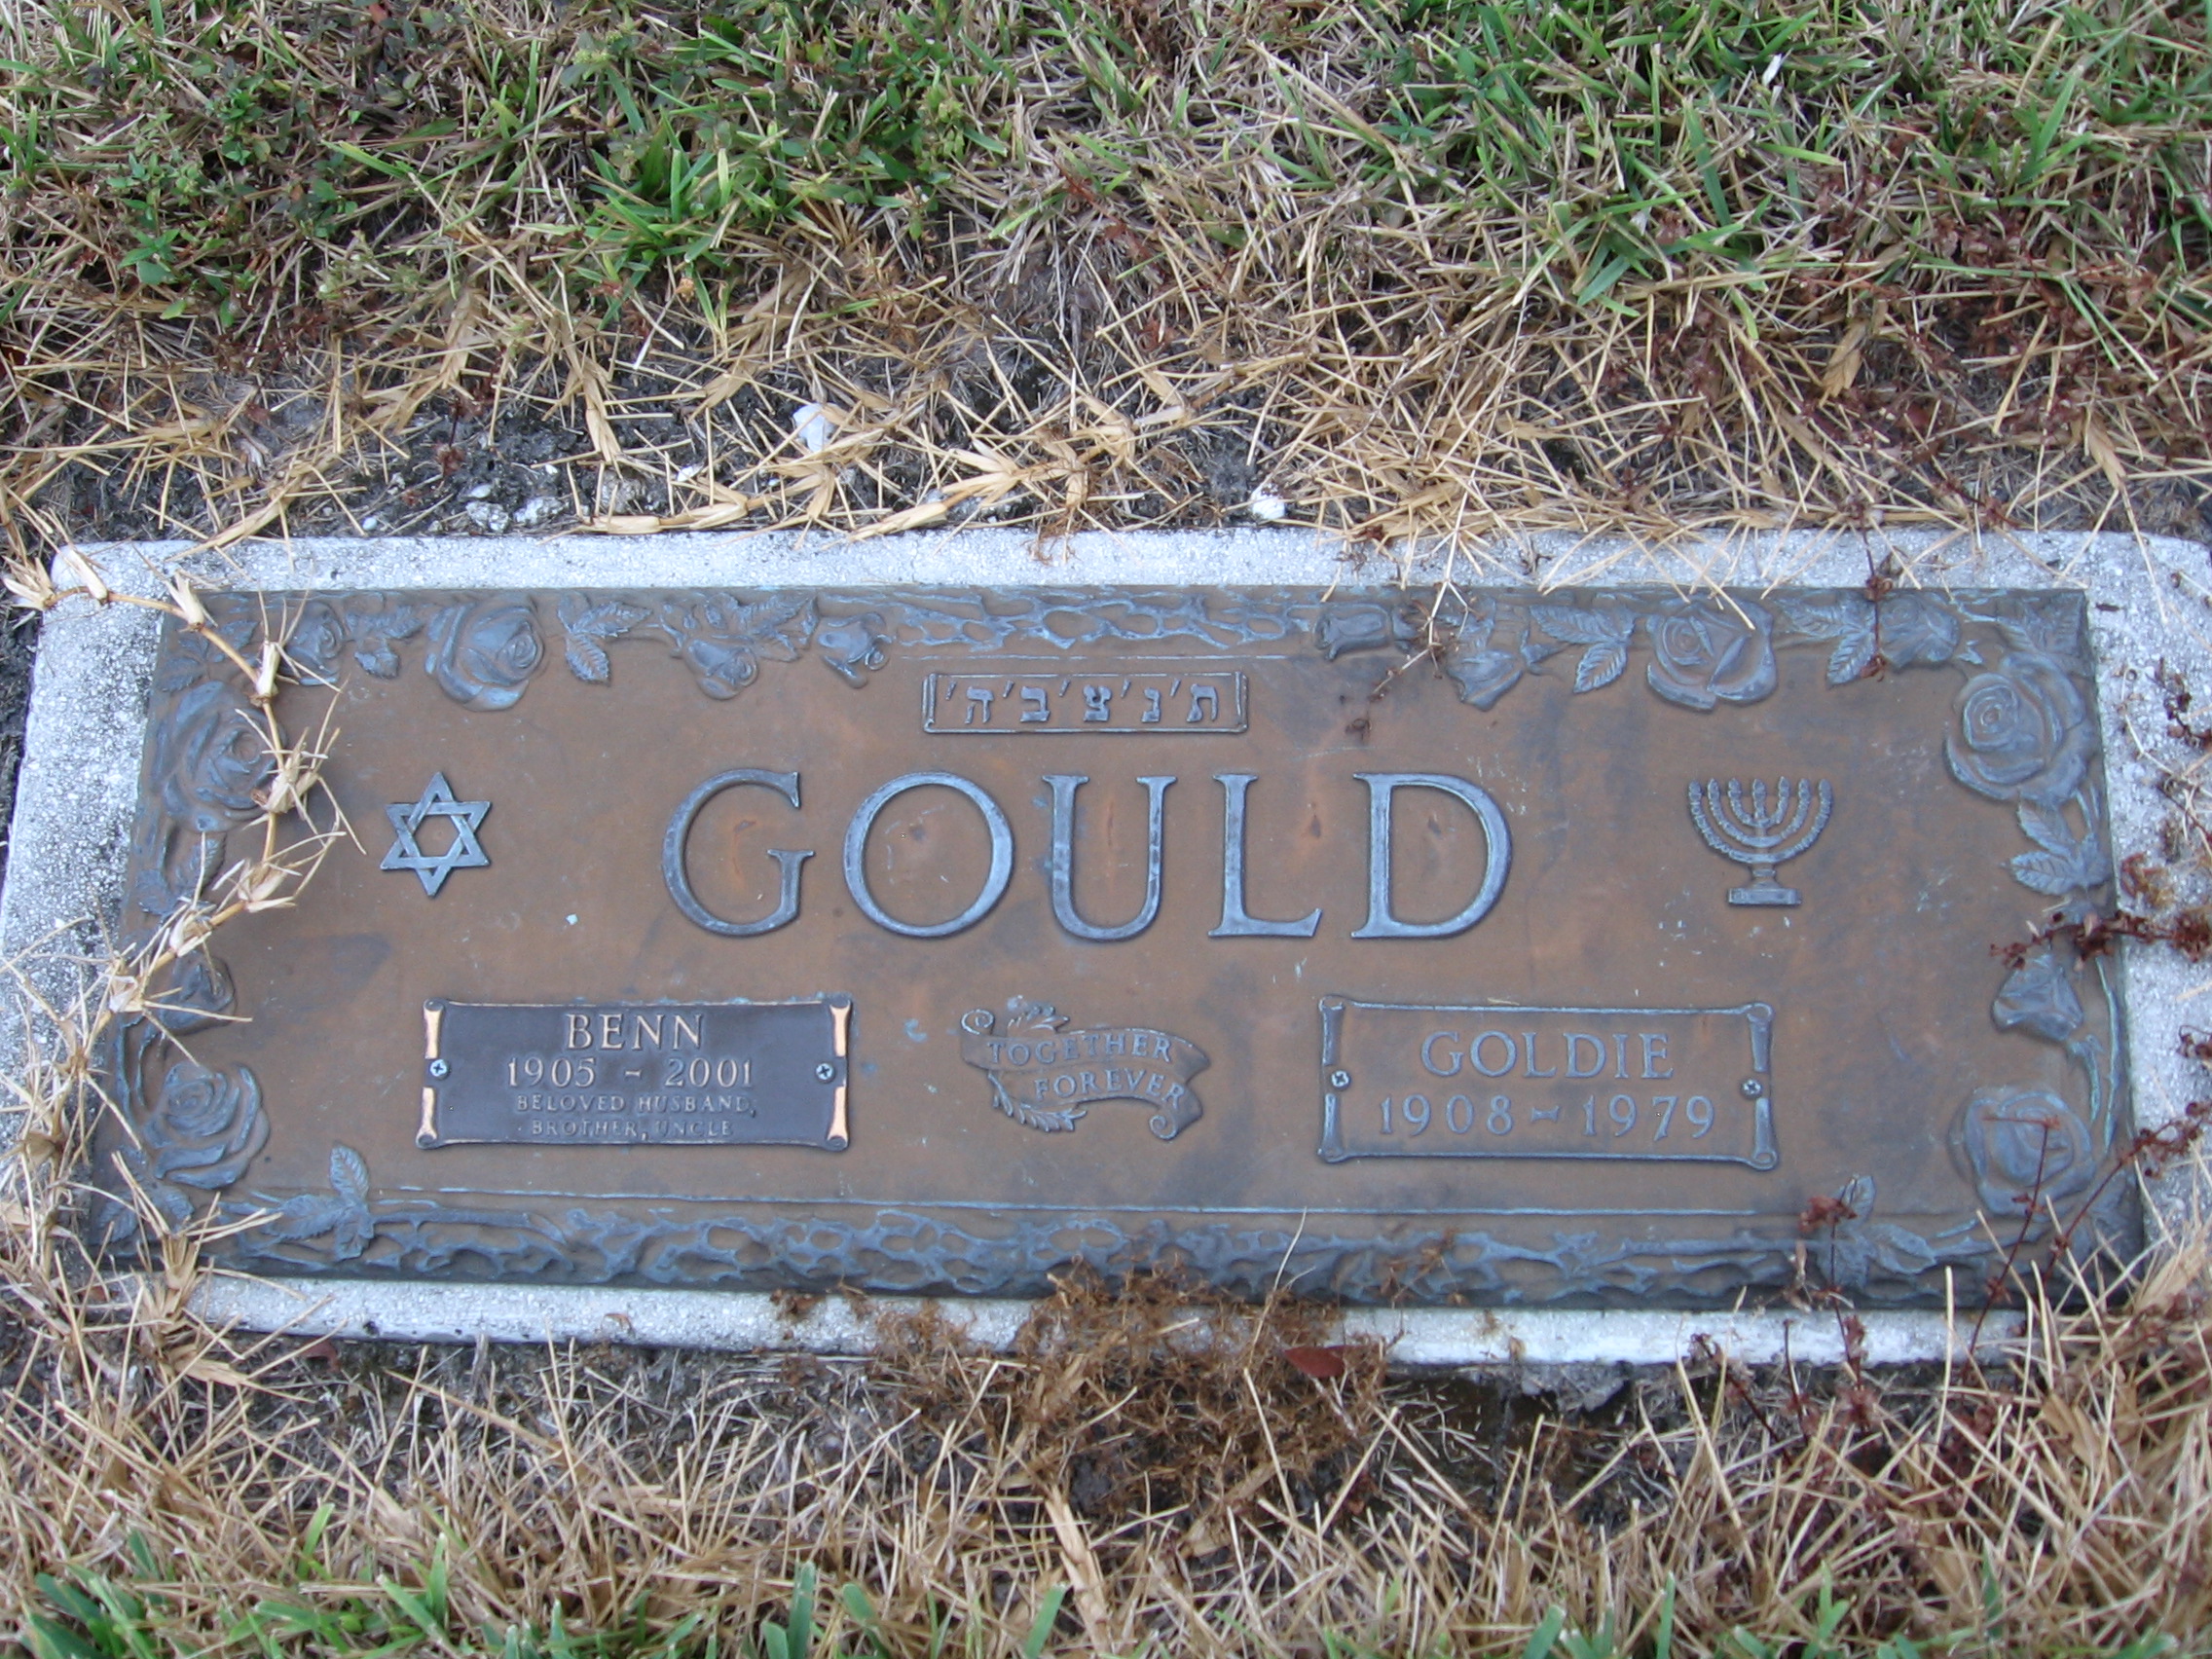 Goldie Gould